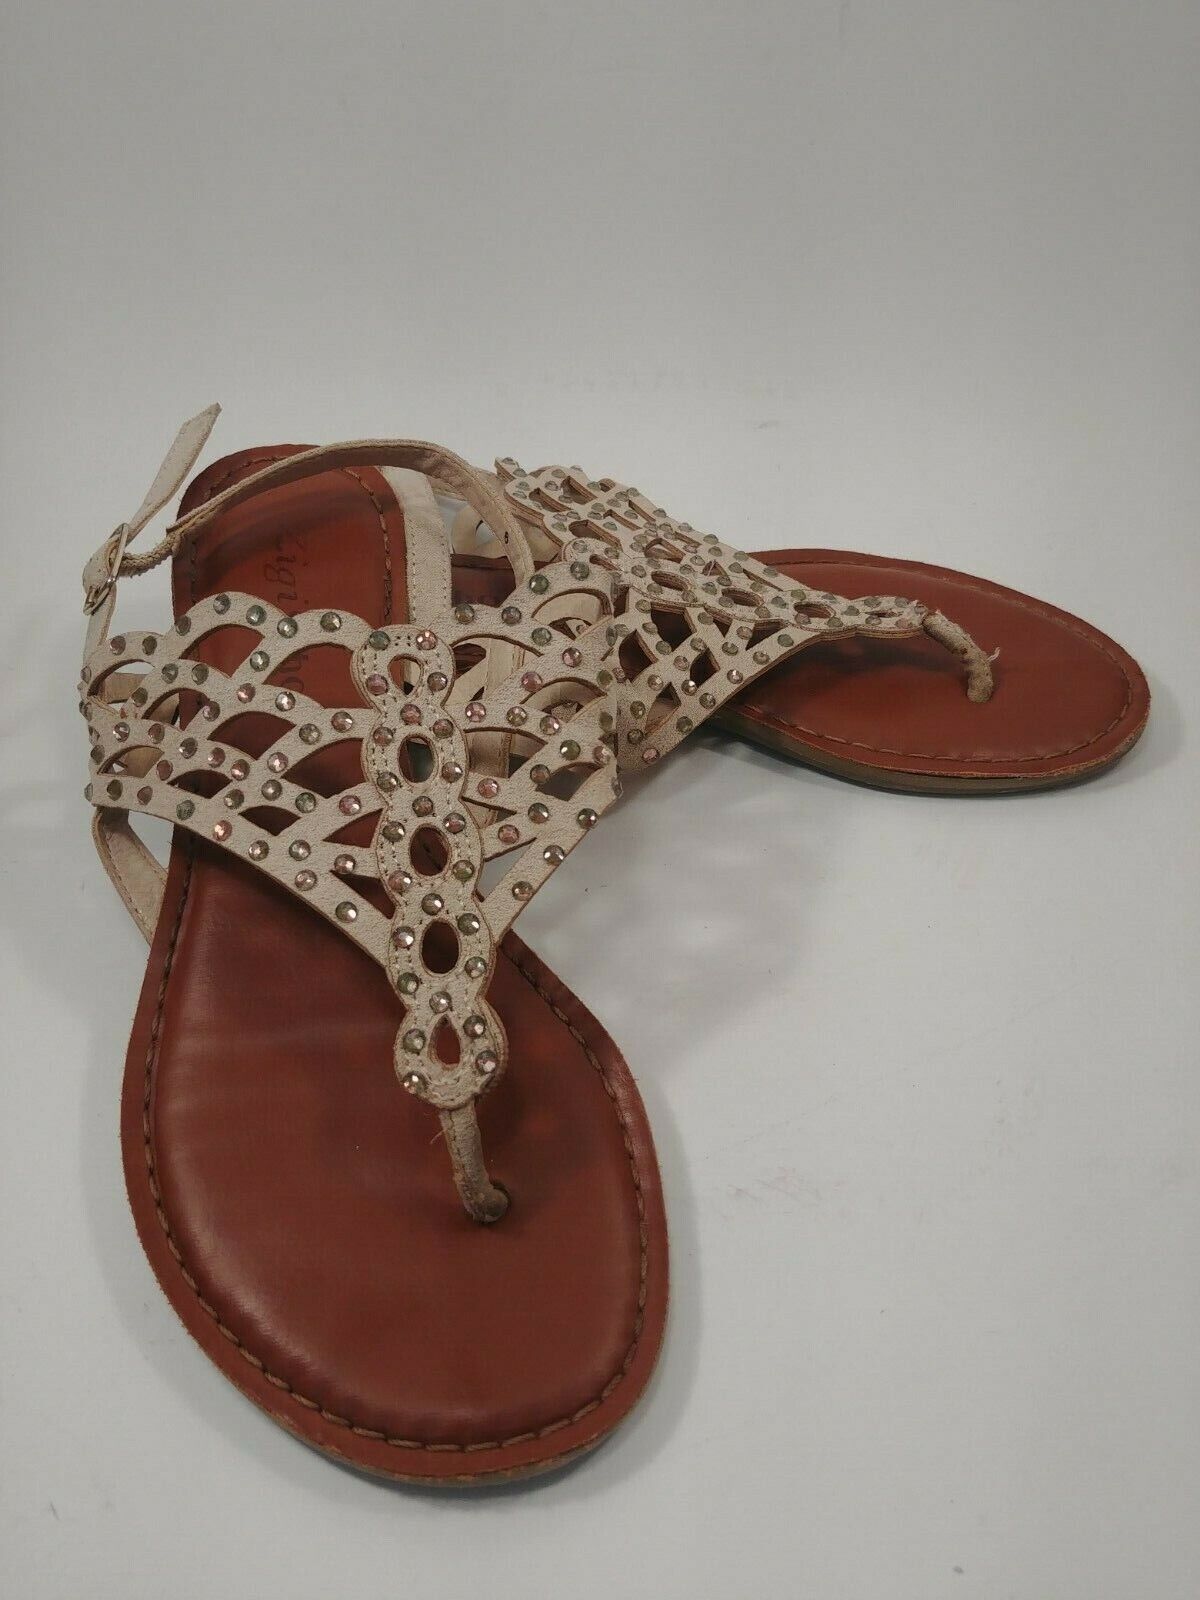 lanthaan Scorch getrouwd Women's Zigi Soho Sandals Tan Rhinestones Size 6M | eBay